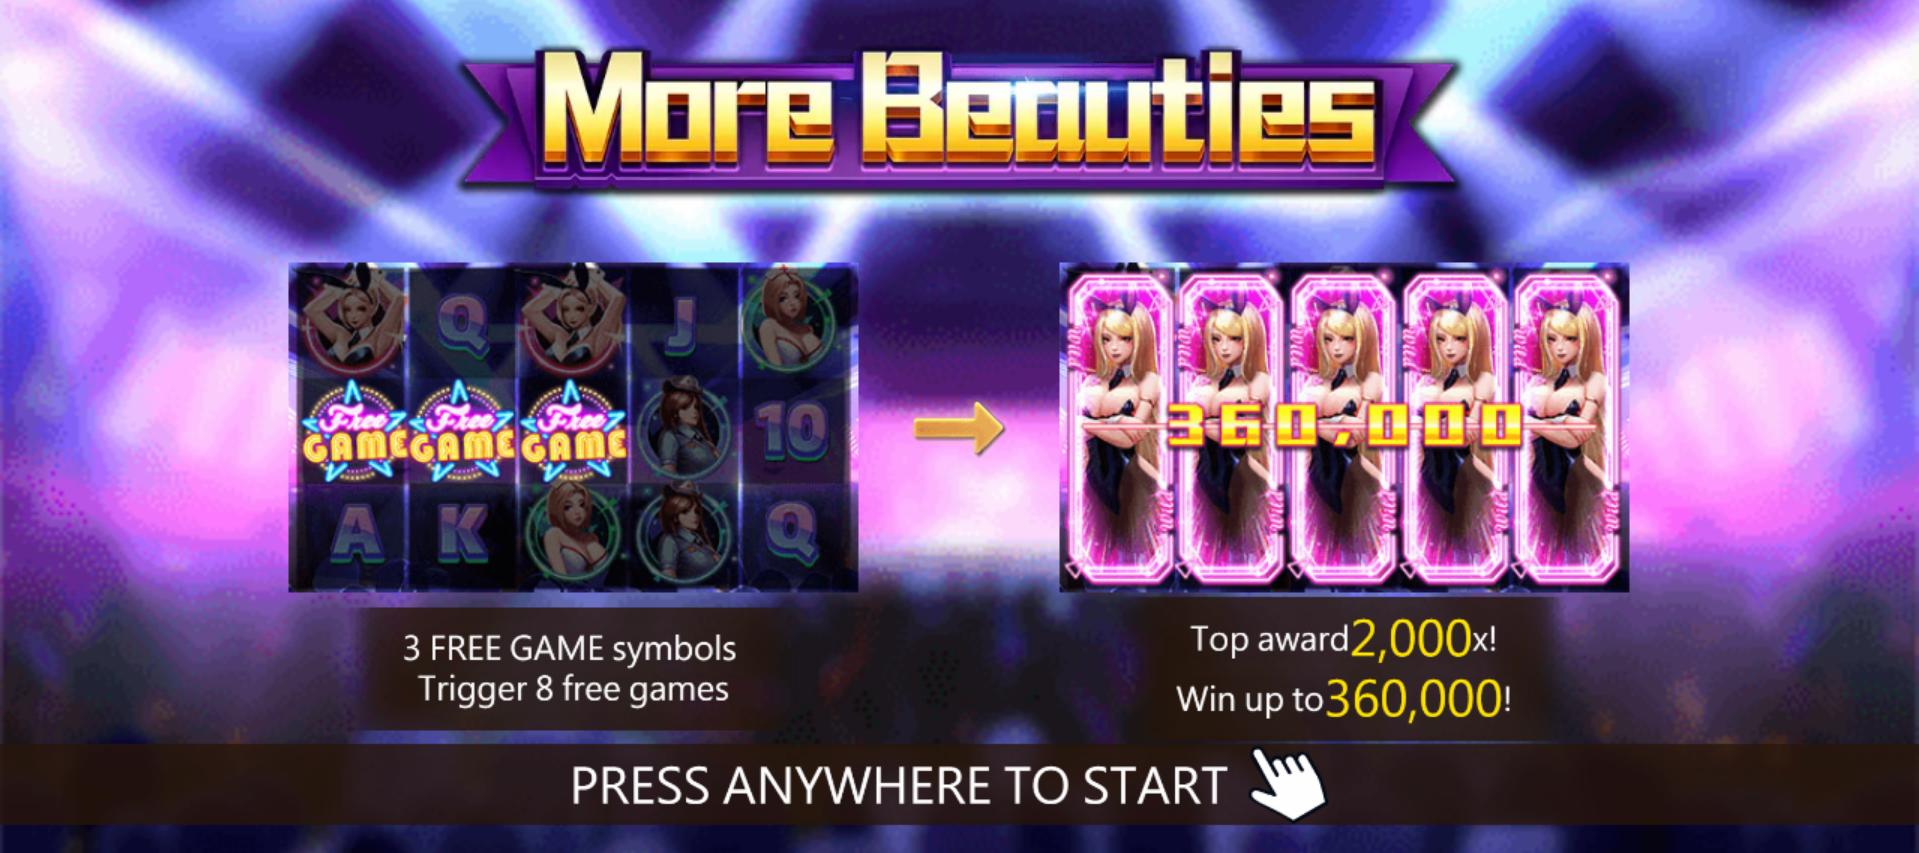 More-Beauties-Slot-bmgaming